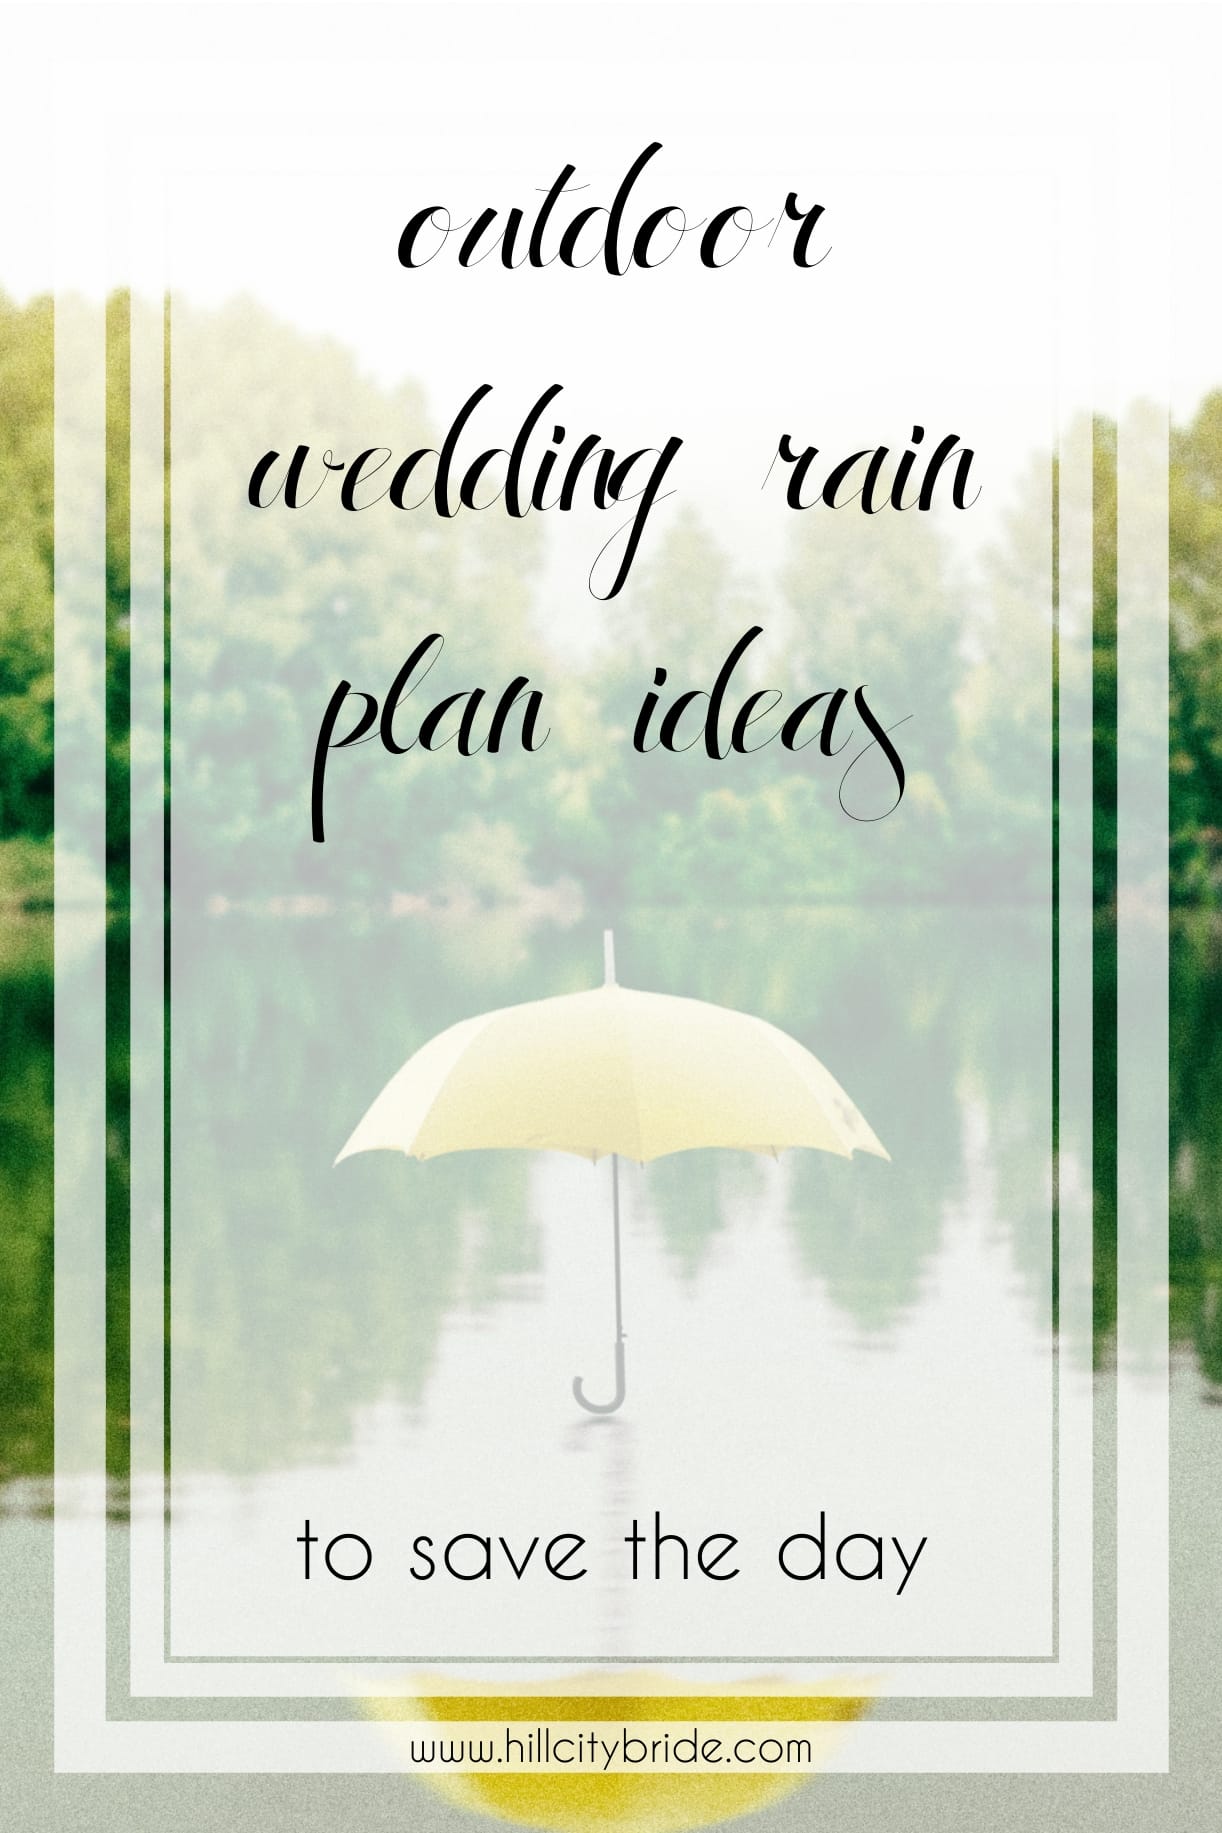 6 Outdoor Wedding Rain Plan Ideas to Save the Day | Hill City Bride Virginia Weddings Blog